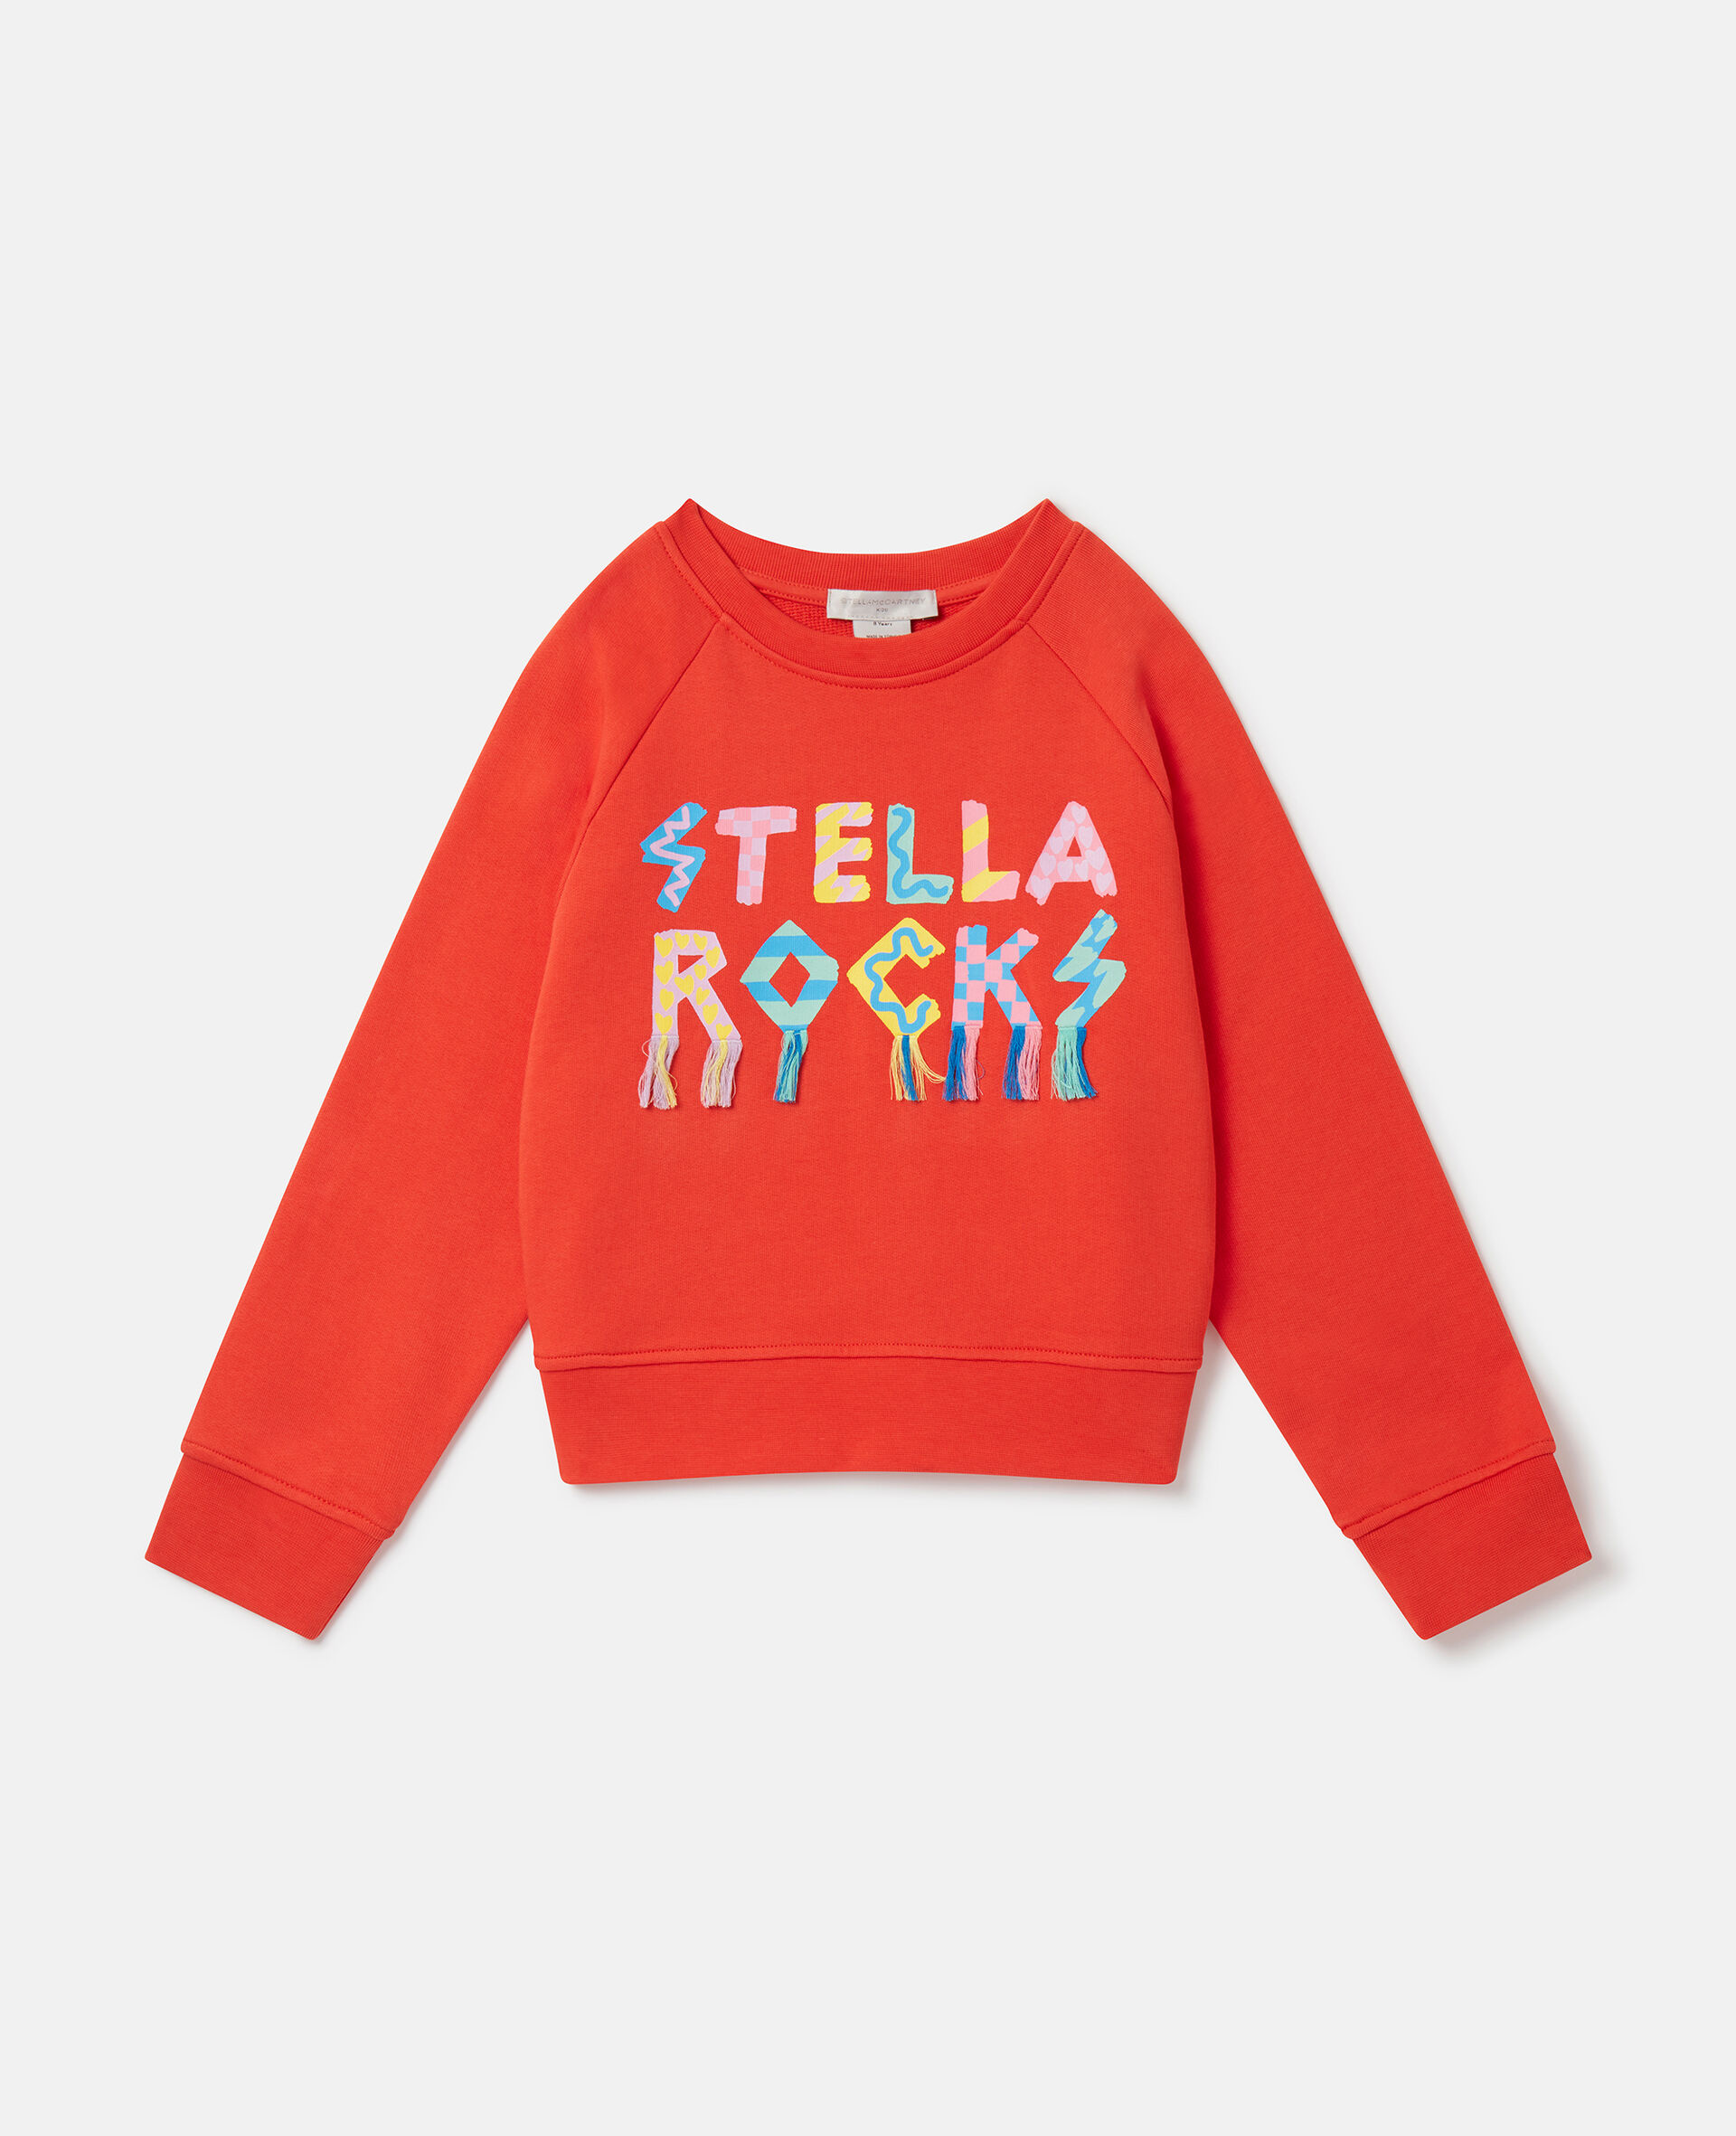 Stella Rocks Sweatshirt-Red-large image number 0